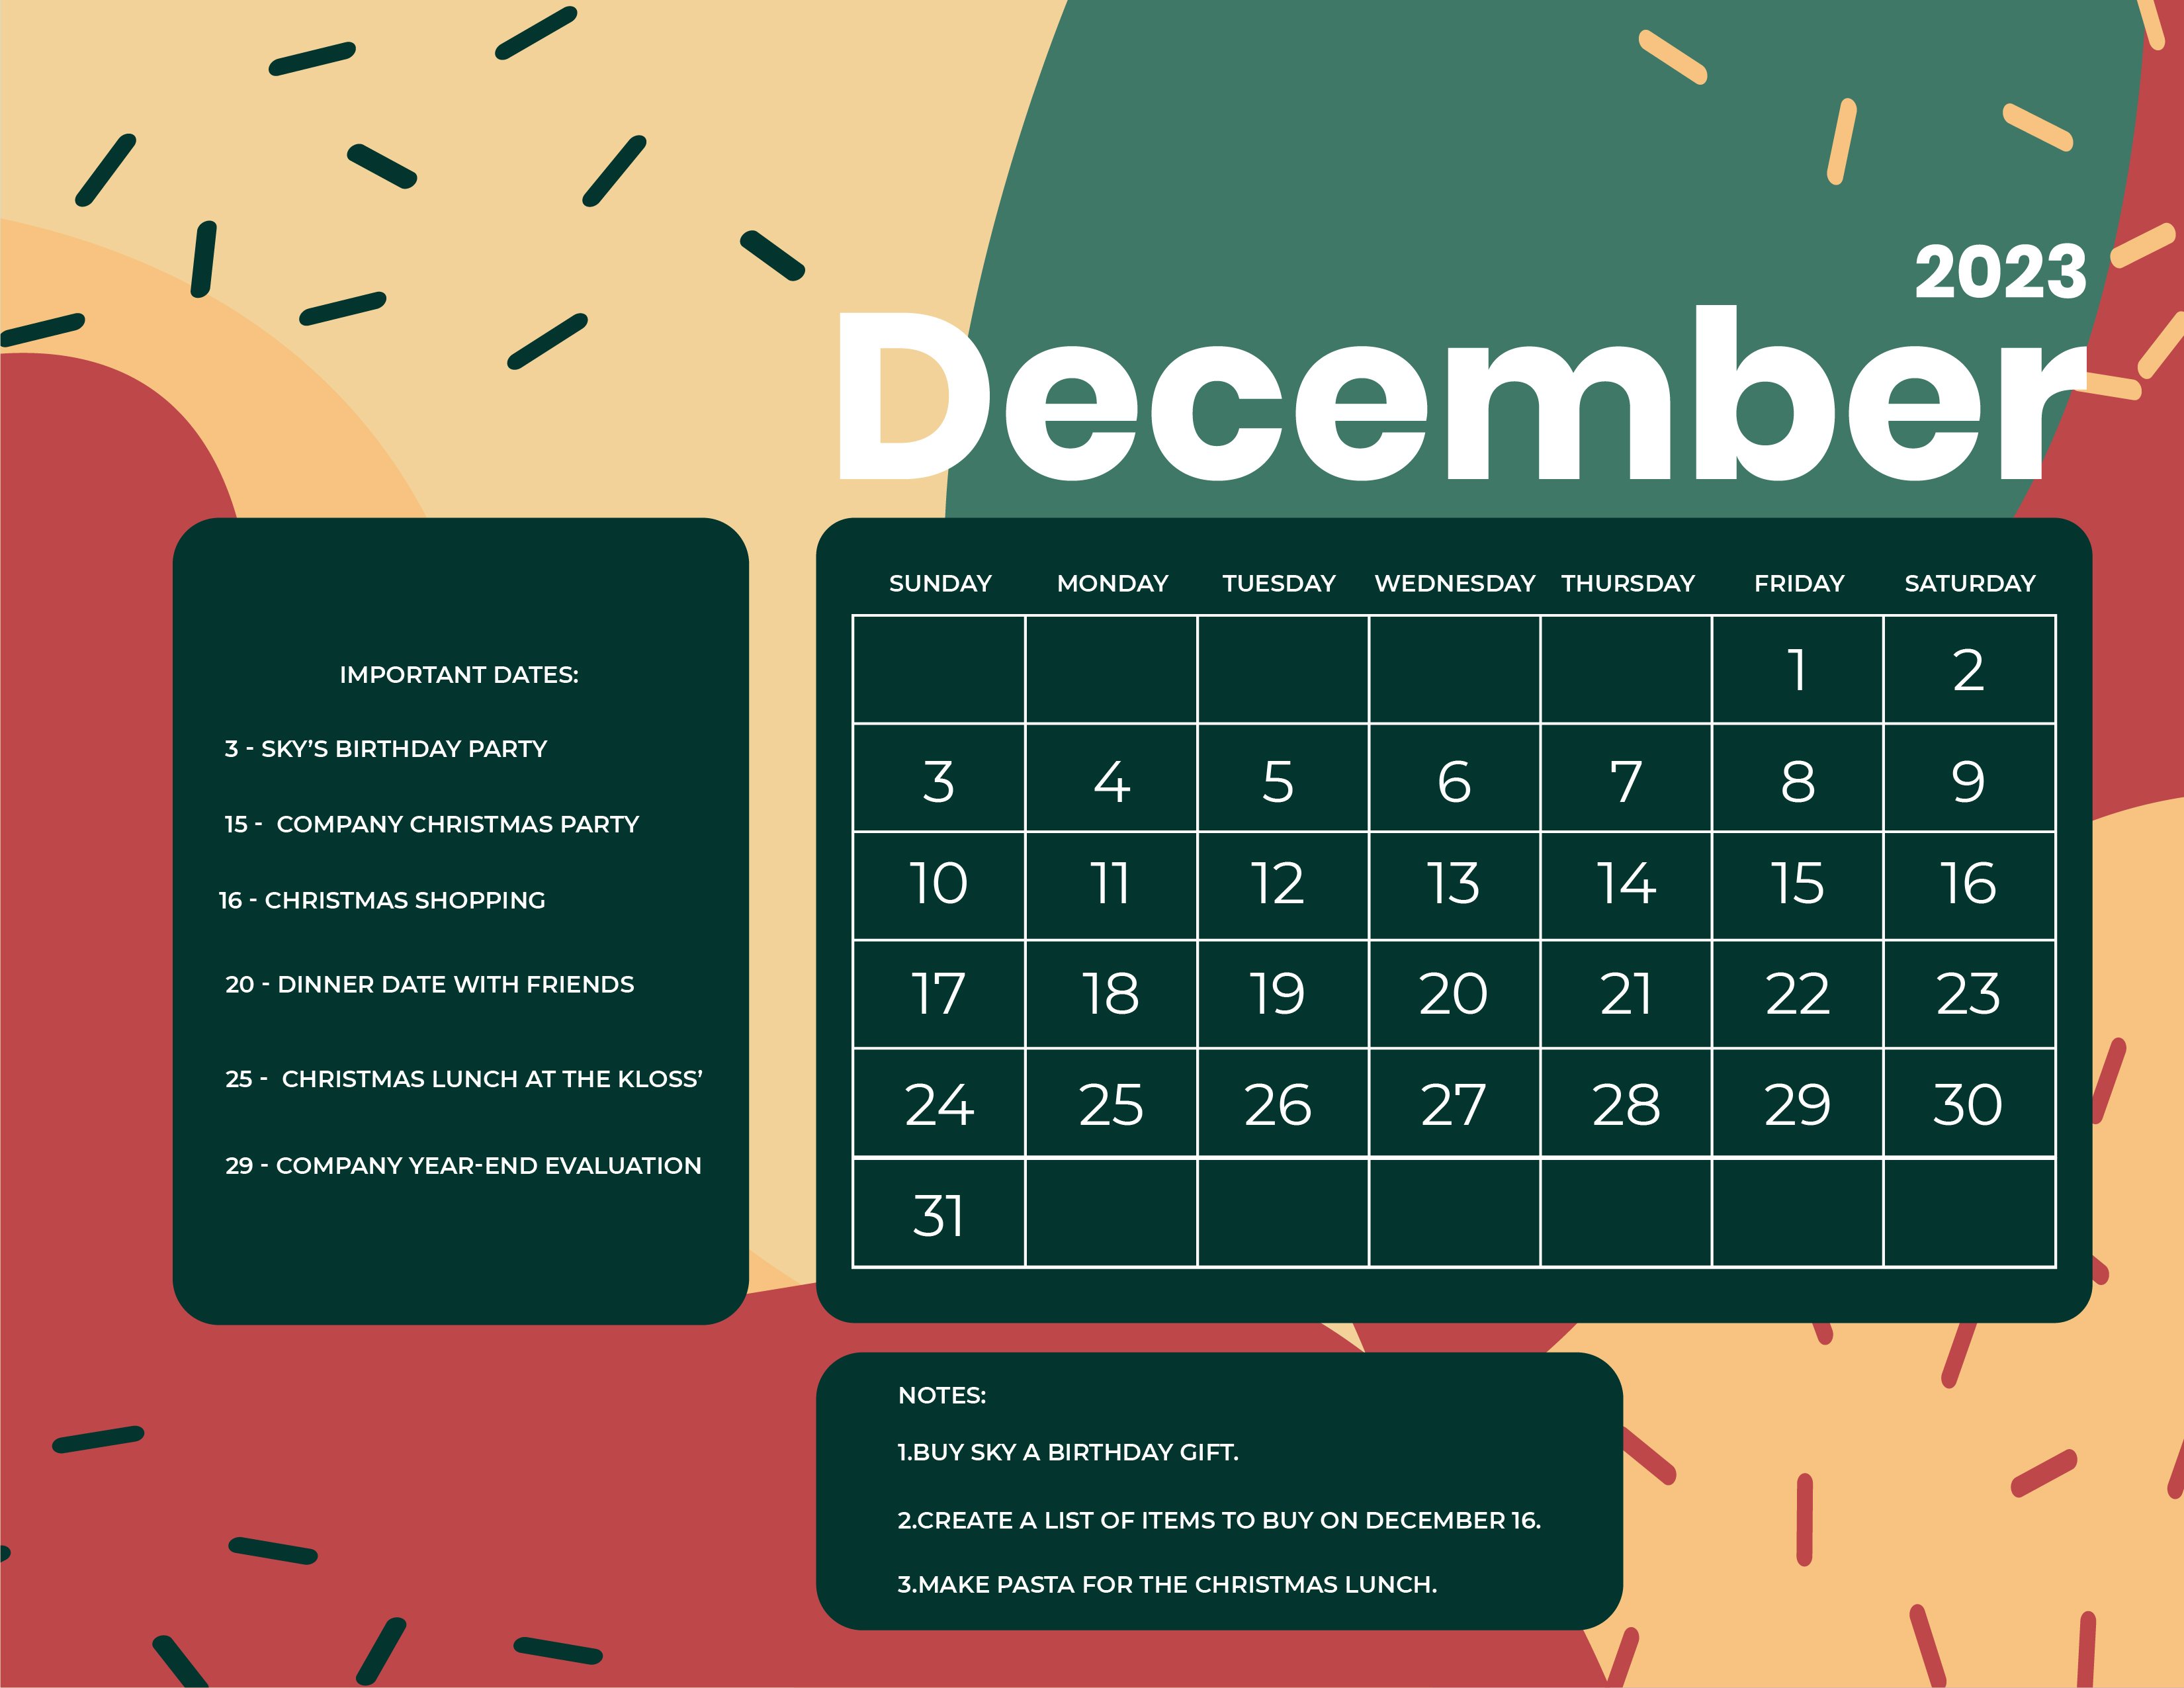 Free Printable December 2023 Calendar in Word, Google Docs, Illustrator, EPS, SVG, JPG